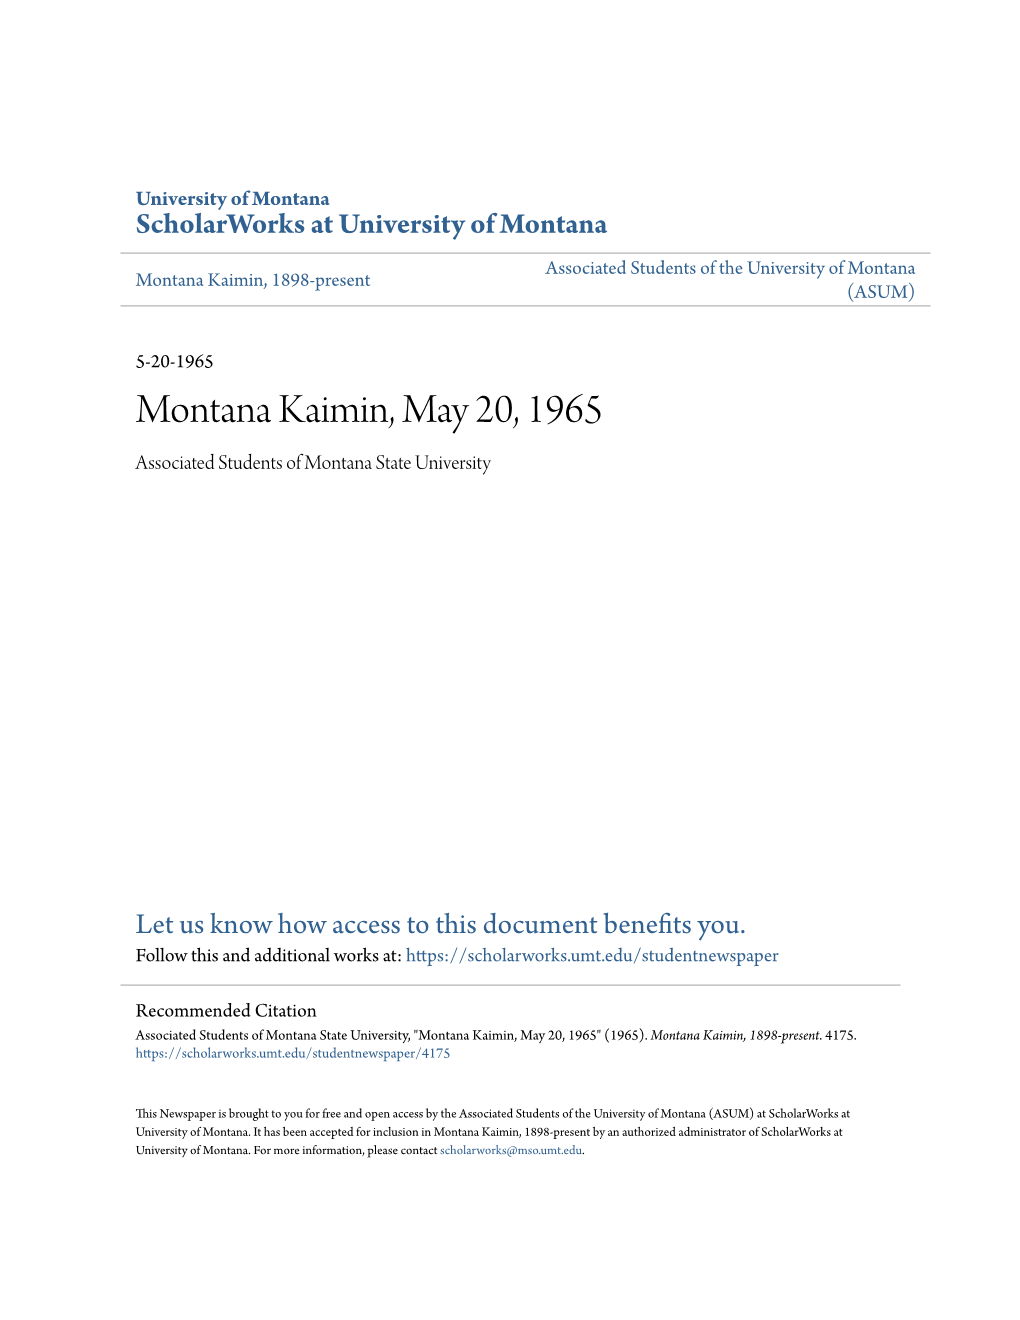 Montana Kaimin, May 20, 1965 Associated Students of Montana State University